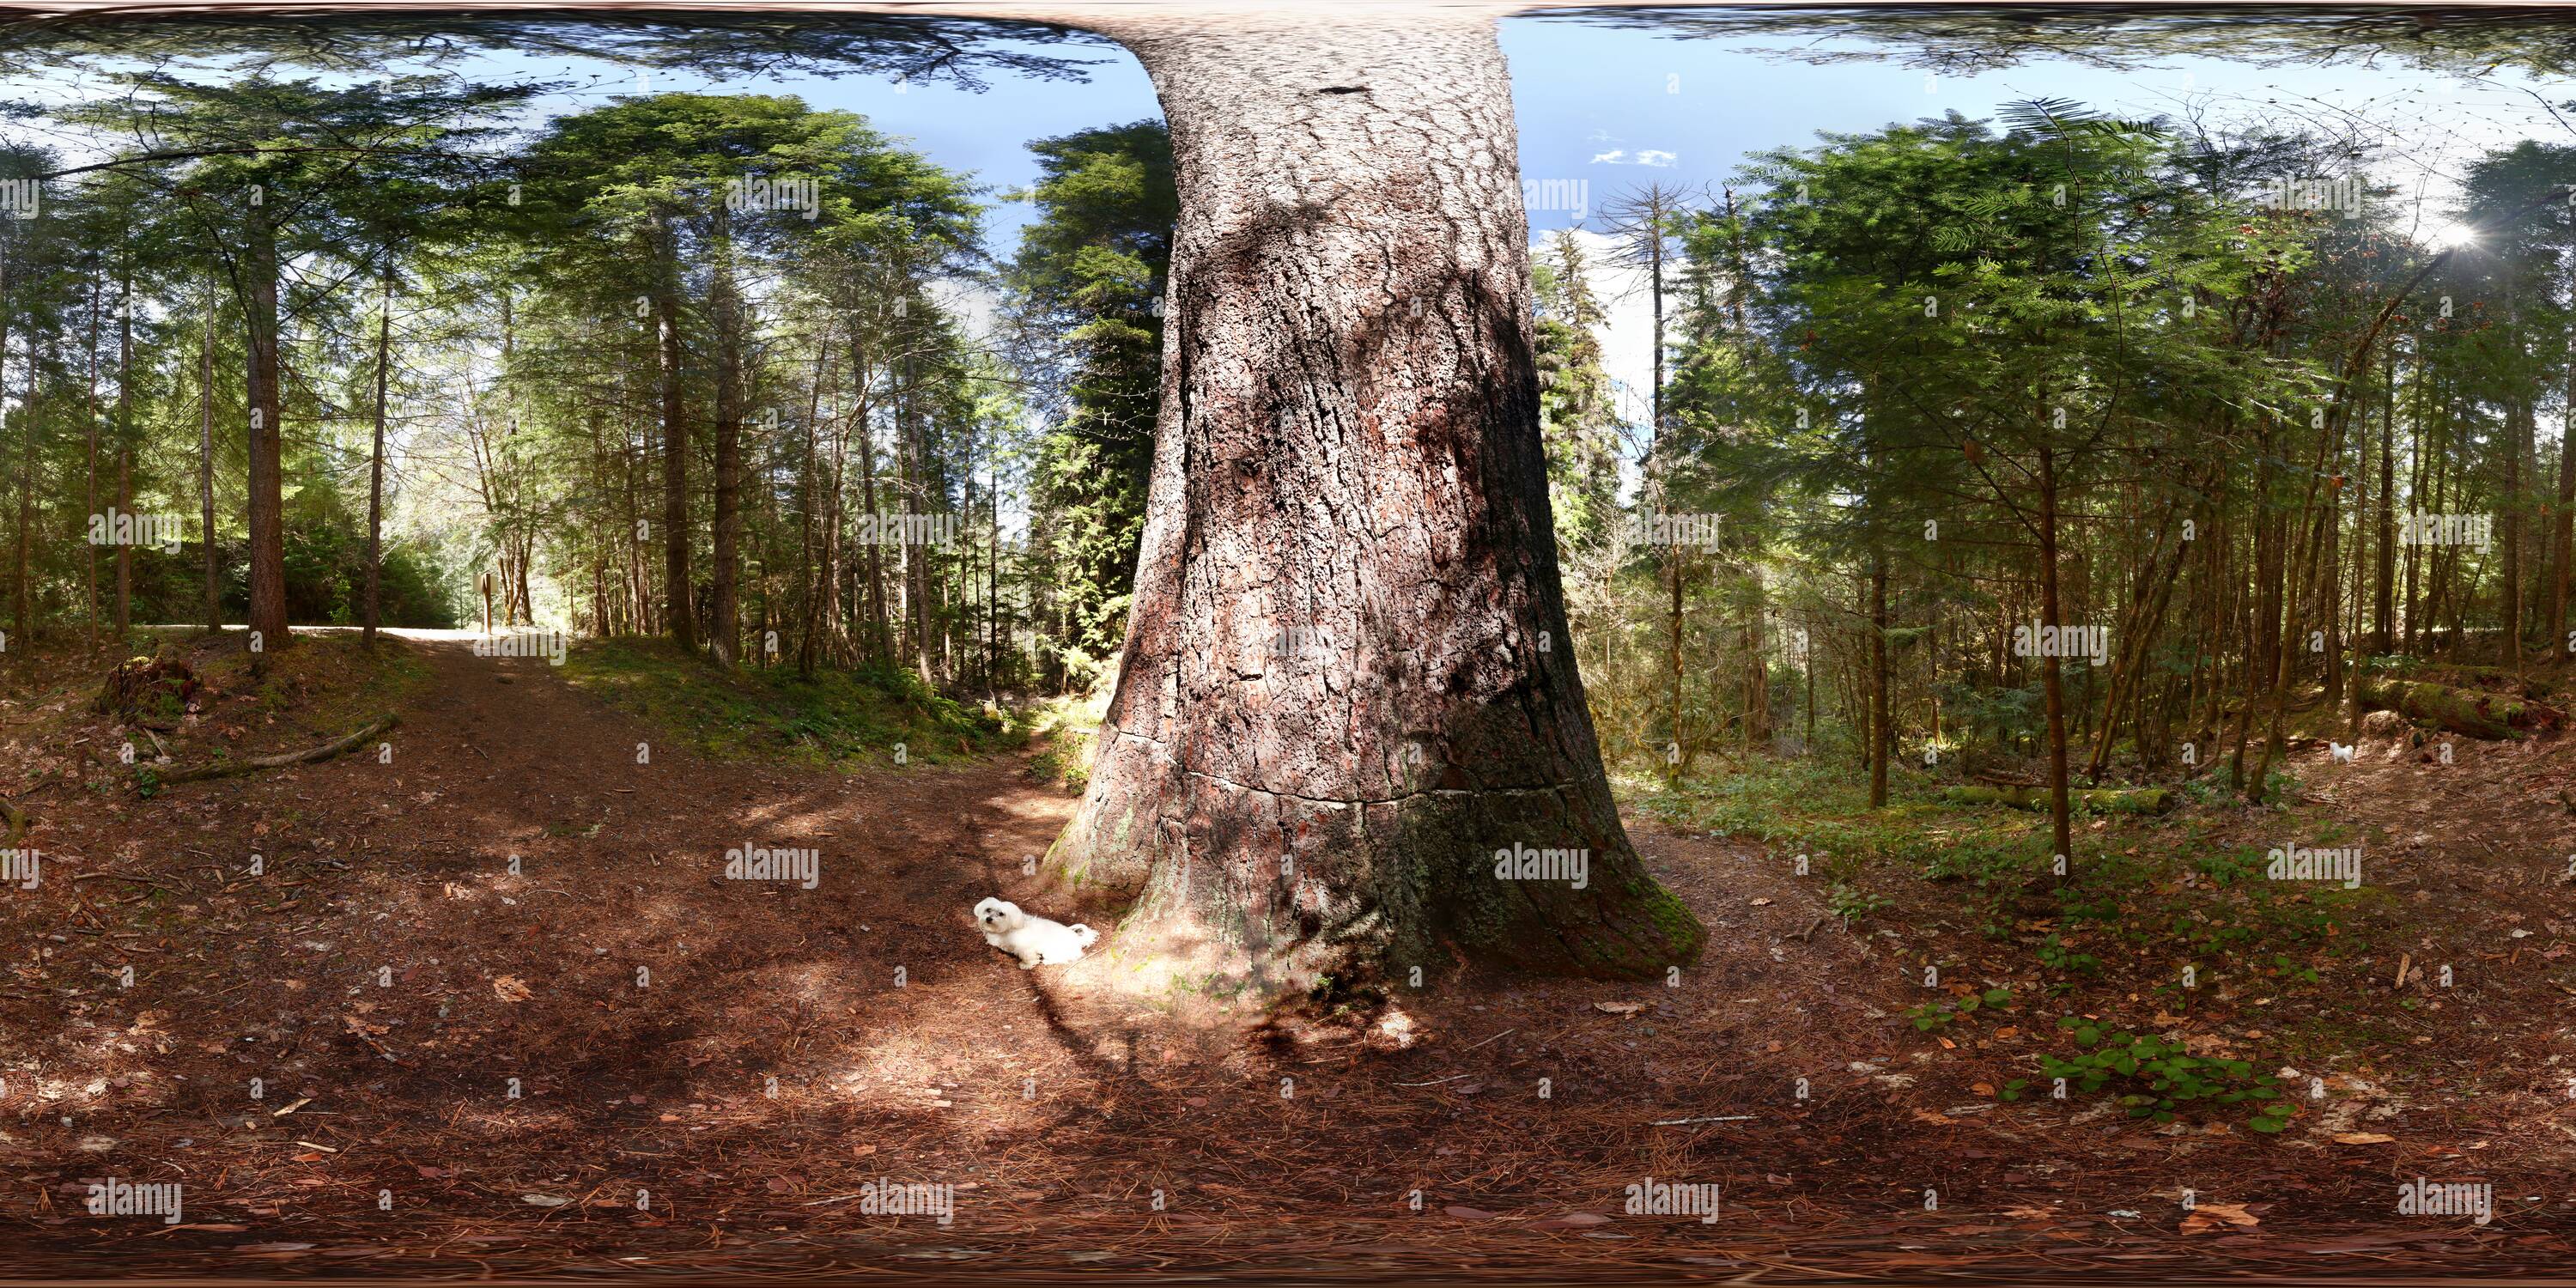 360 degree panoramic view of Tallest sugar pine